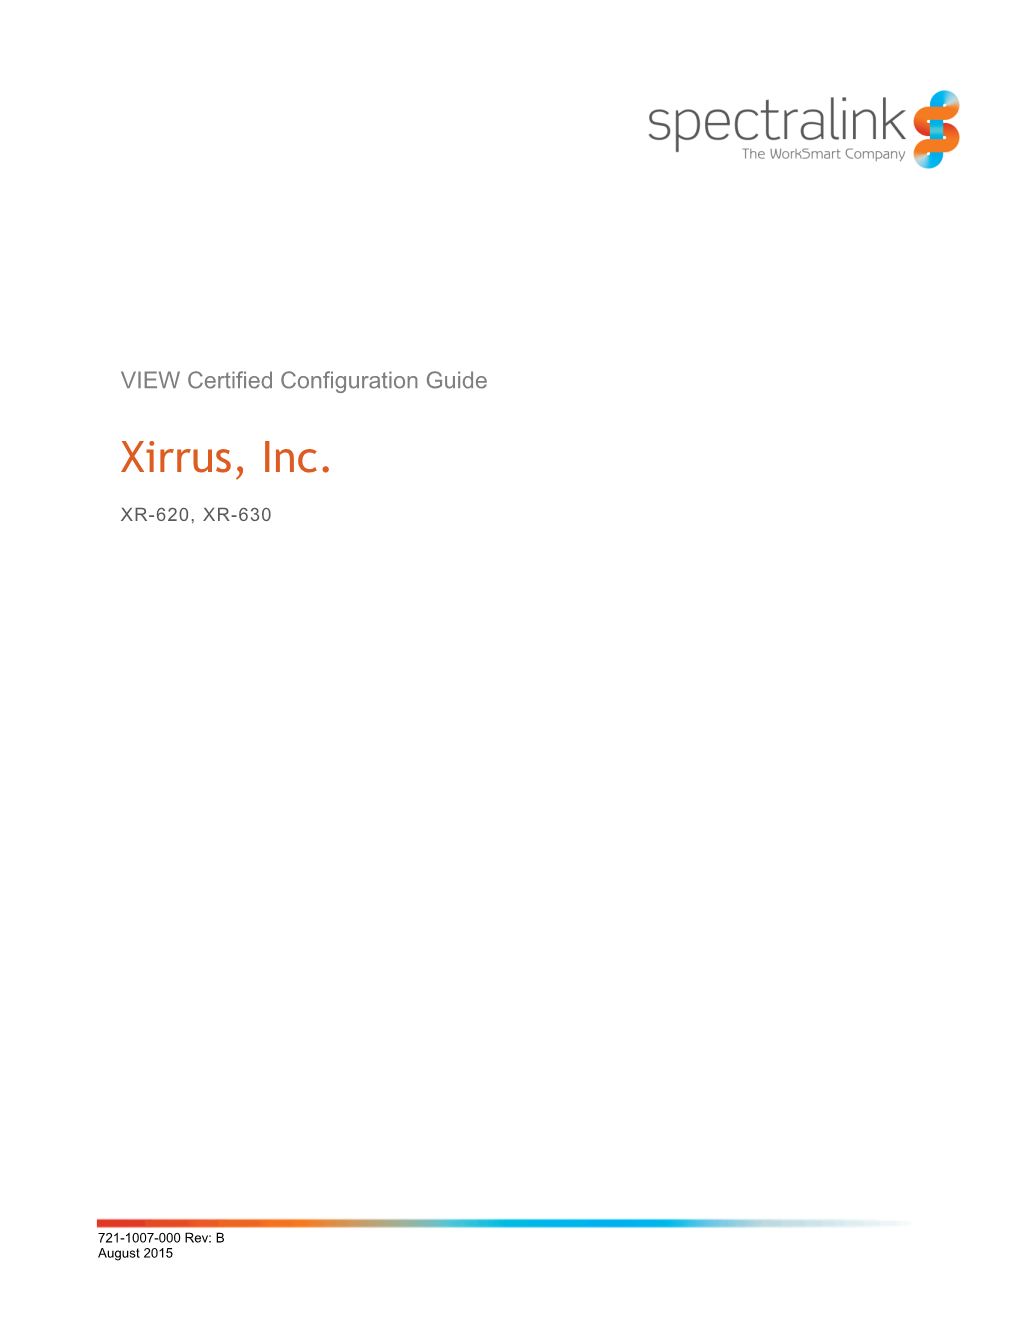 Xirrus VIEW Configuration Guide